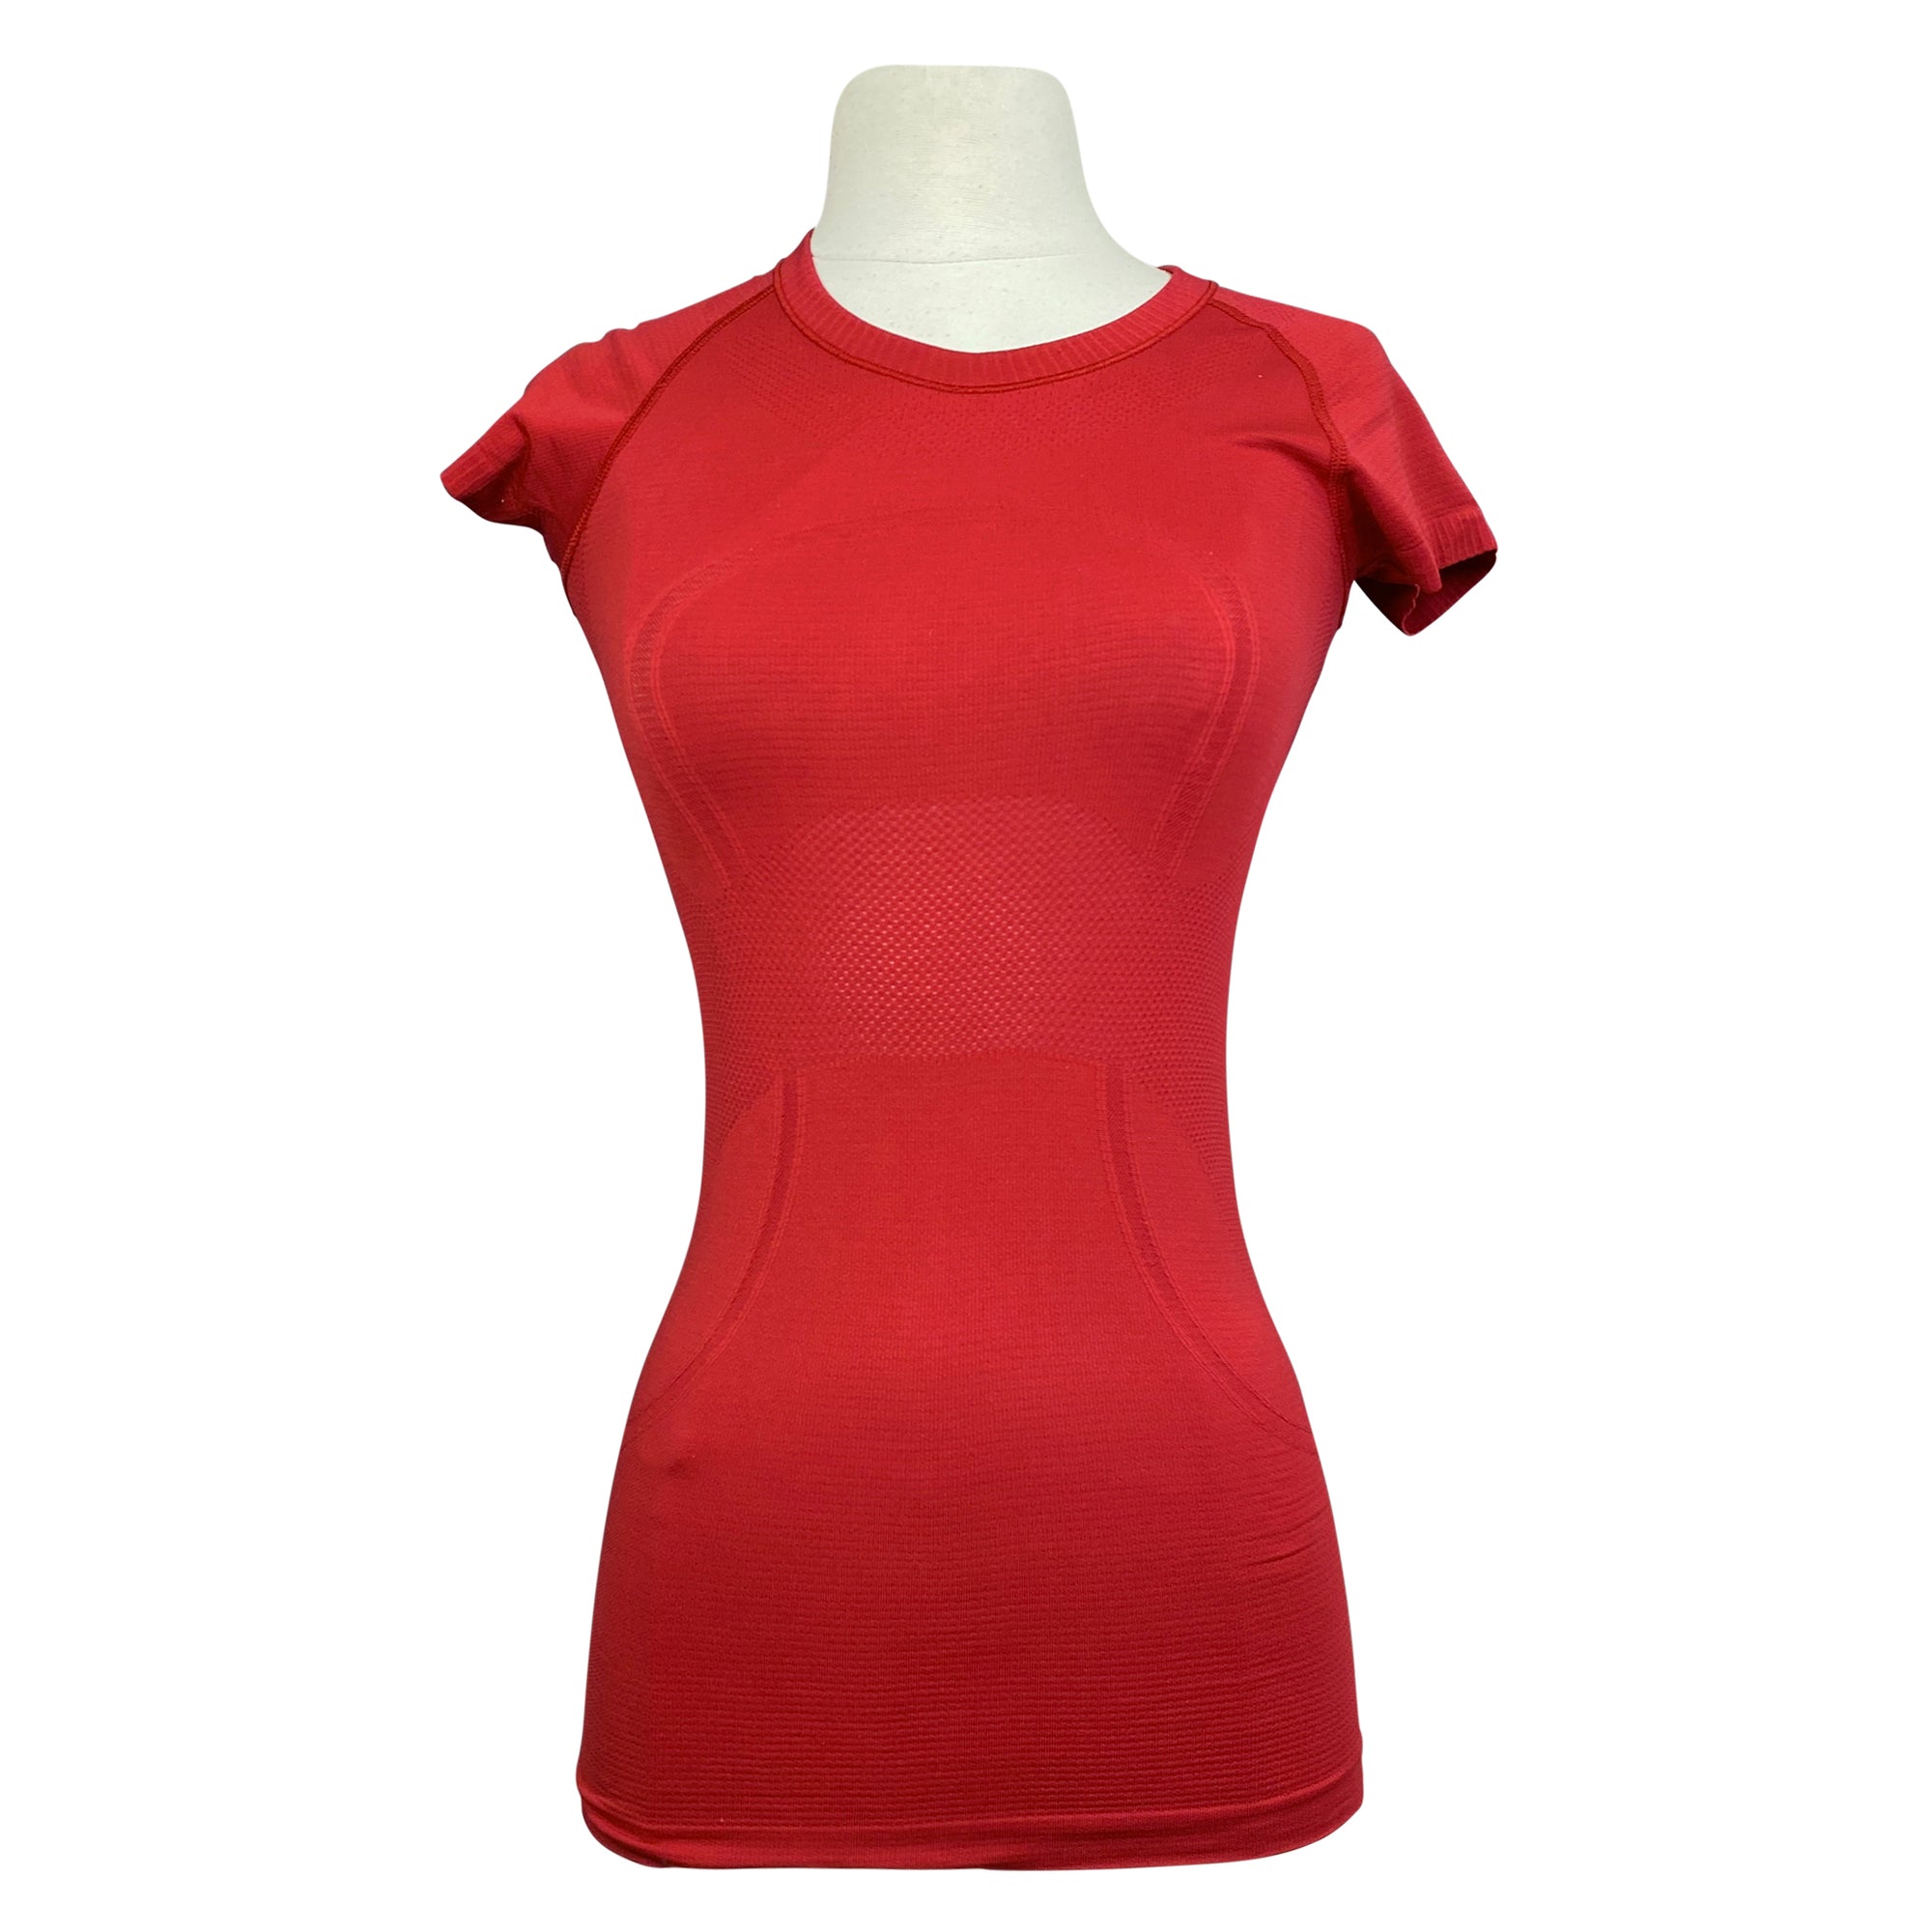 Lululemon 'Swiftly' Tech Short Sleeve 2.0 in Tomato Red - Women's